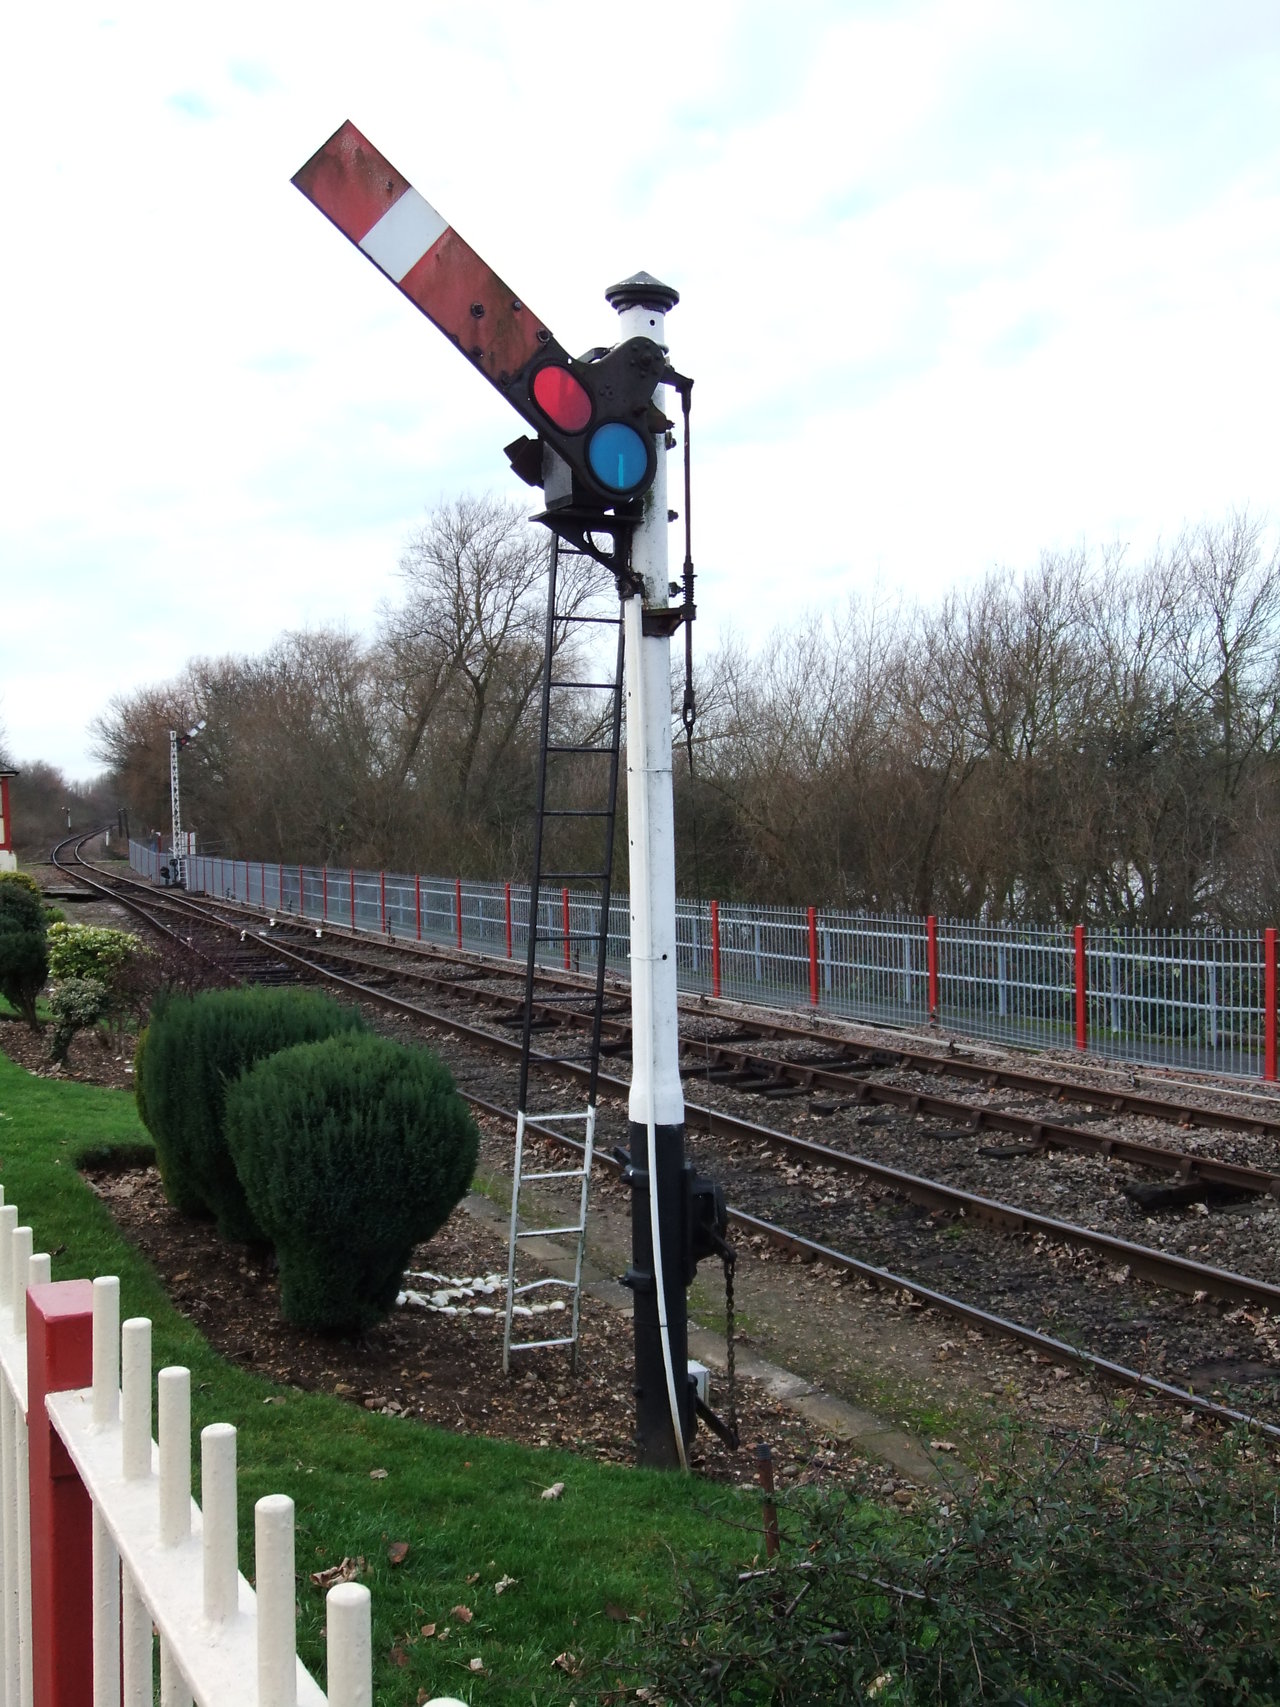 Old Fashioned Railway Signal 01 by fuguestock on DeviantArt